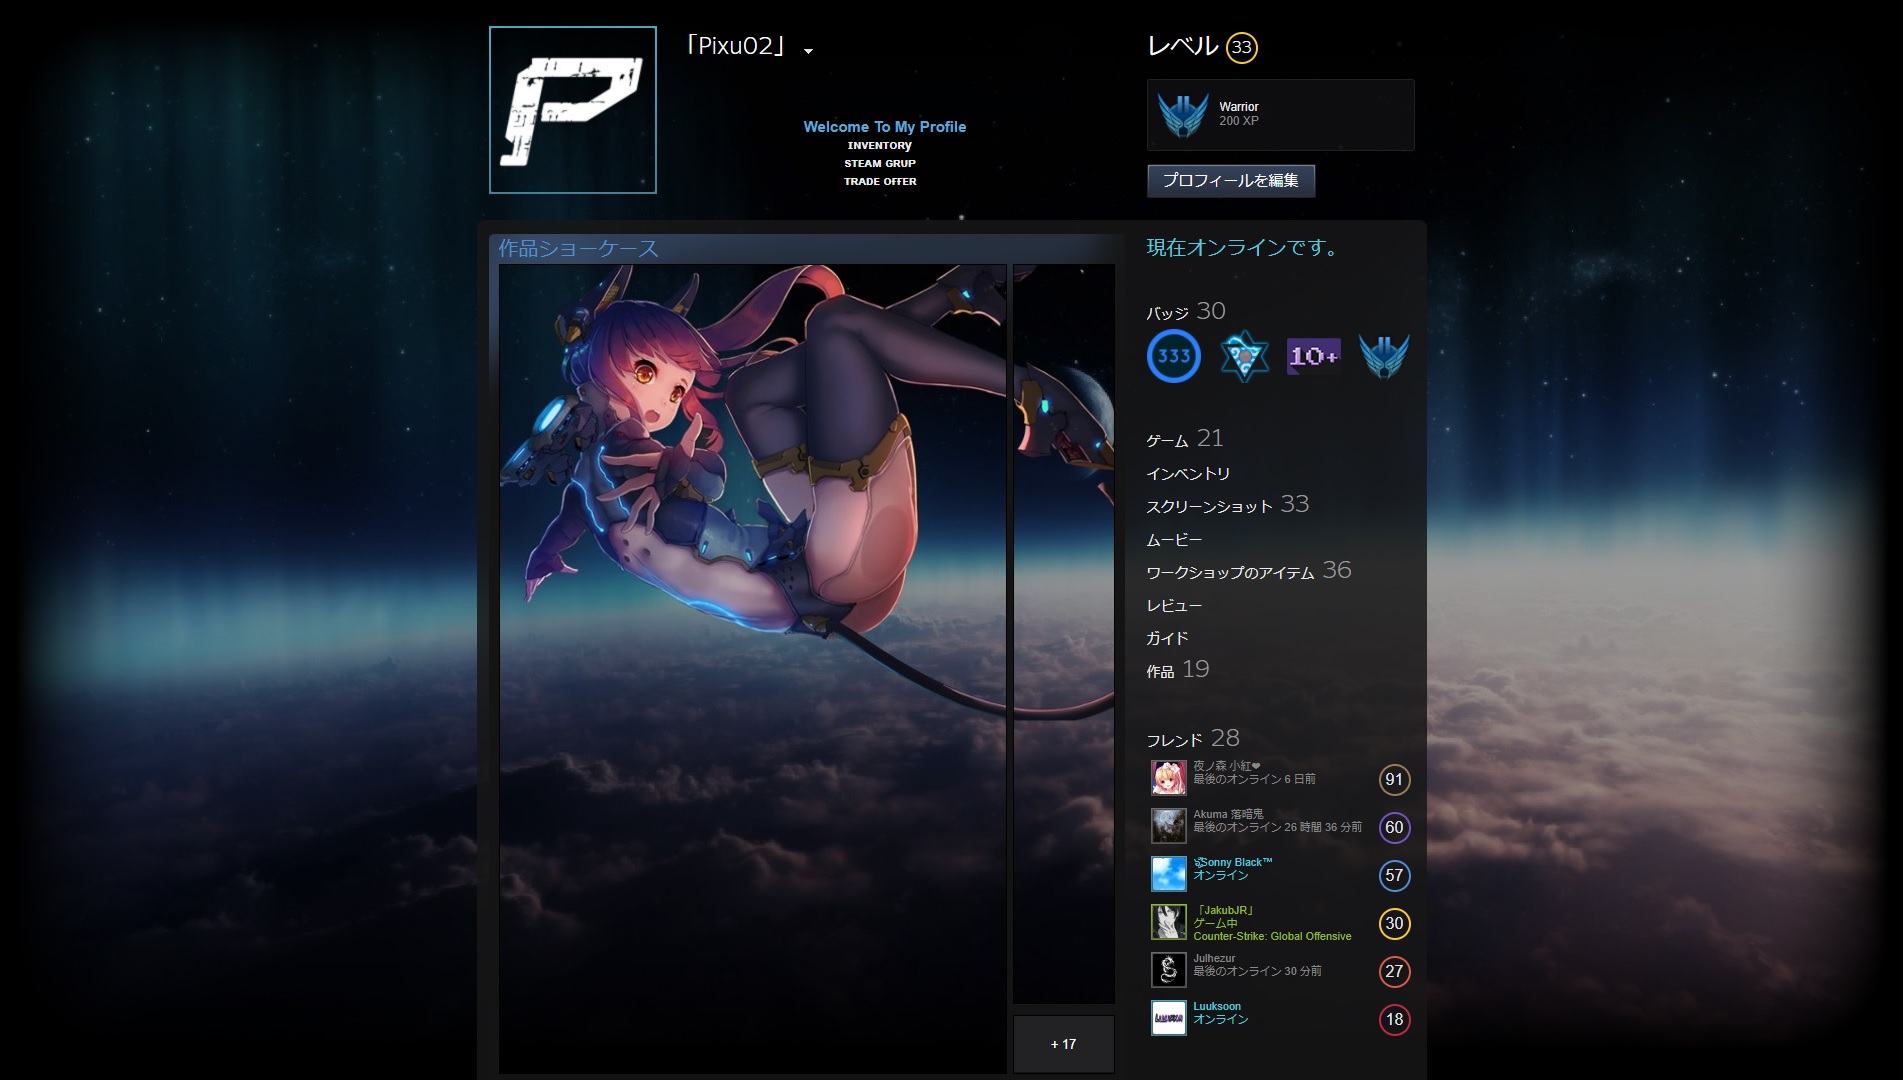 Anime Girl Cyborg | Steam Profile Design by Pixu02 on DeviantArt